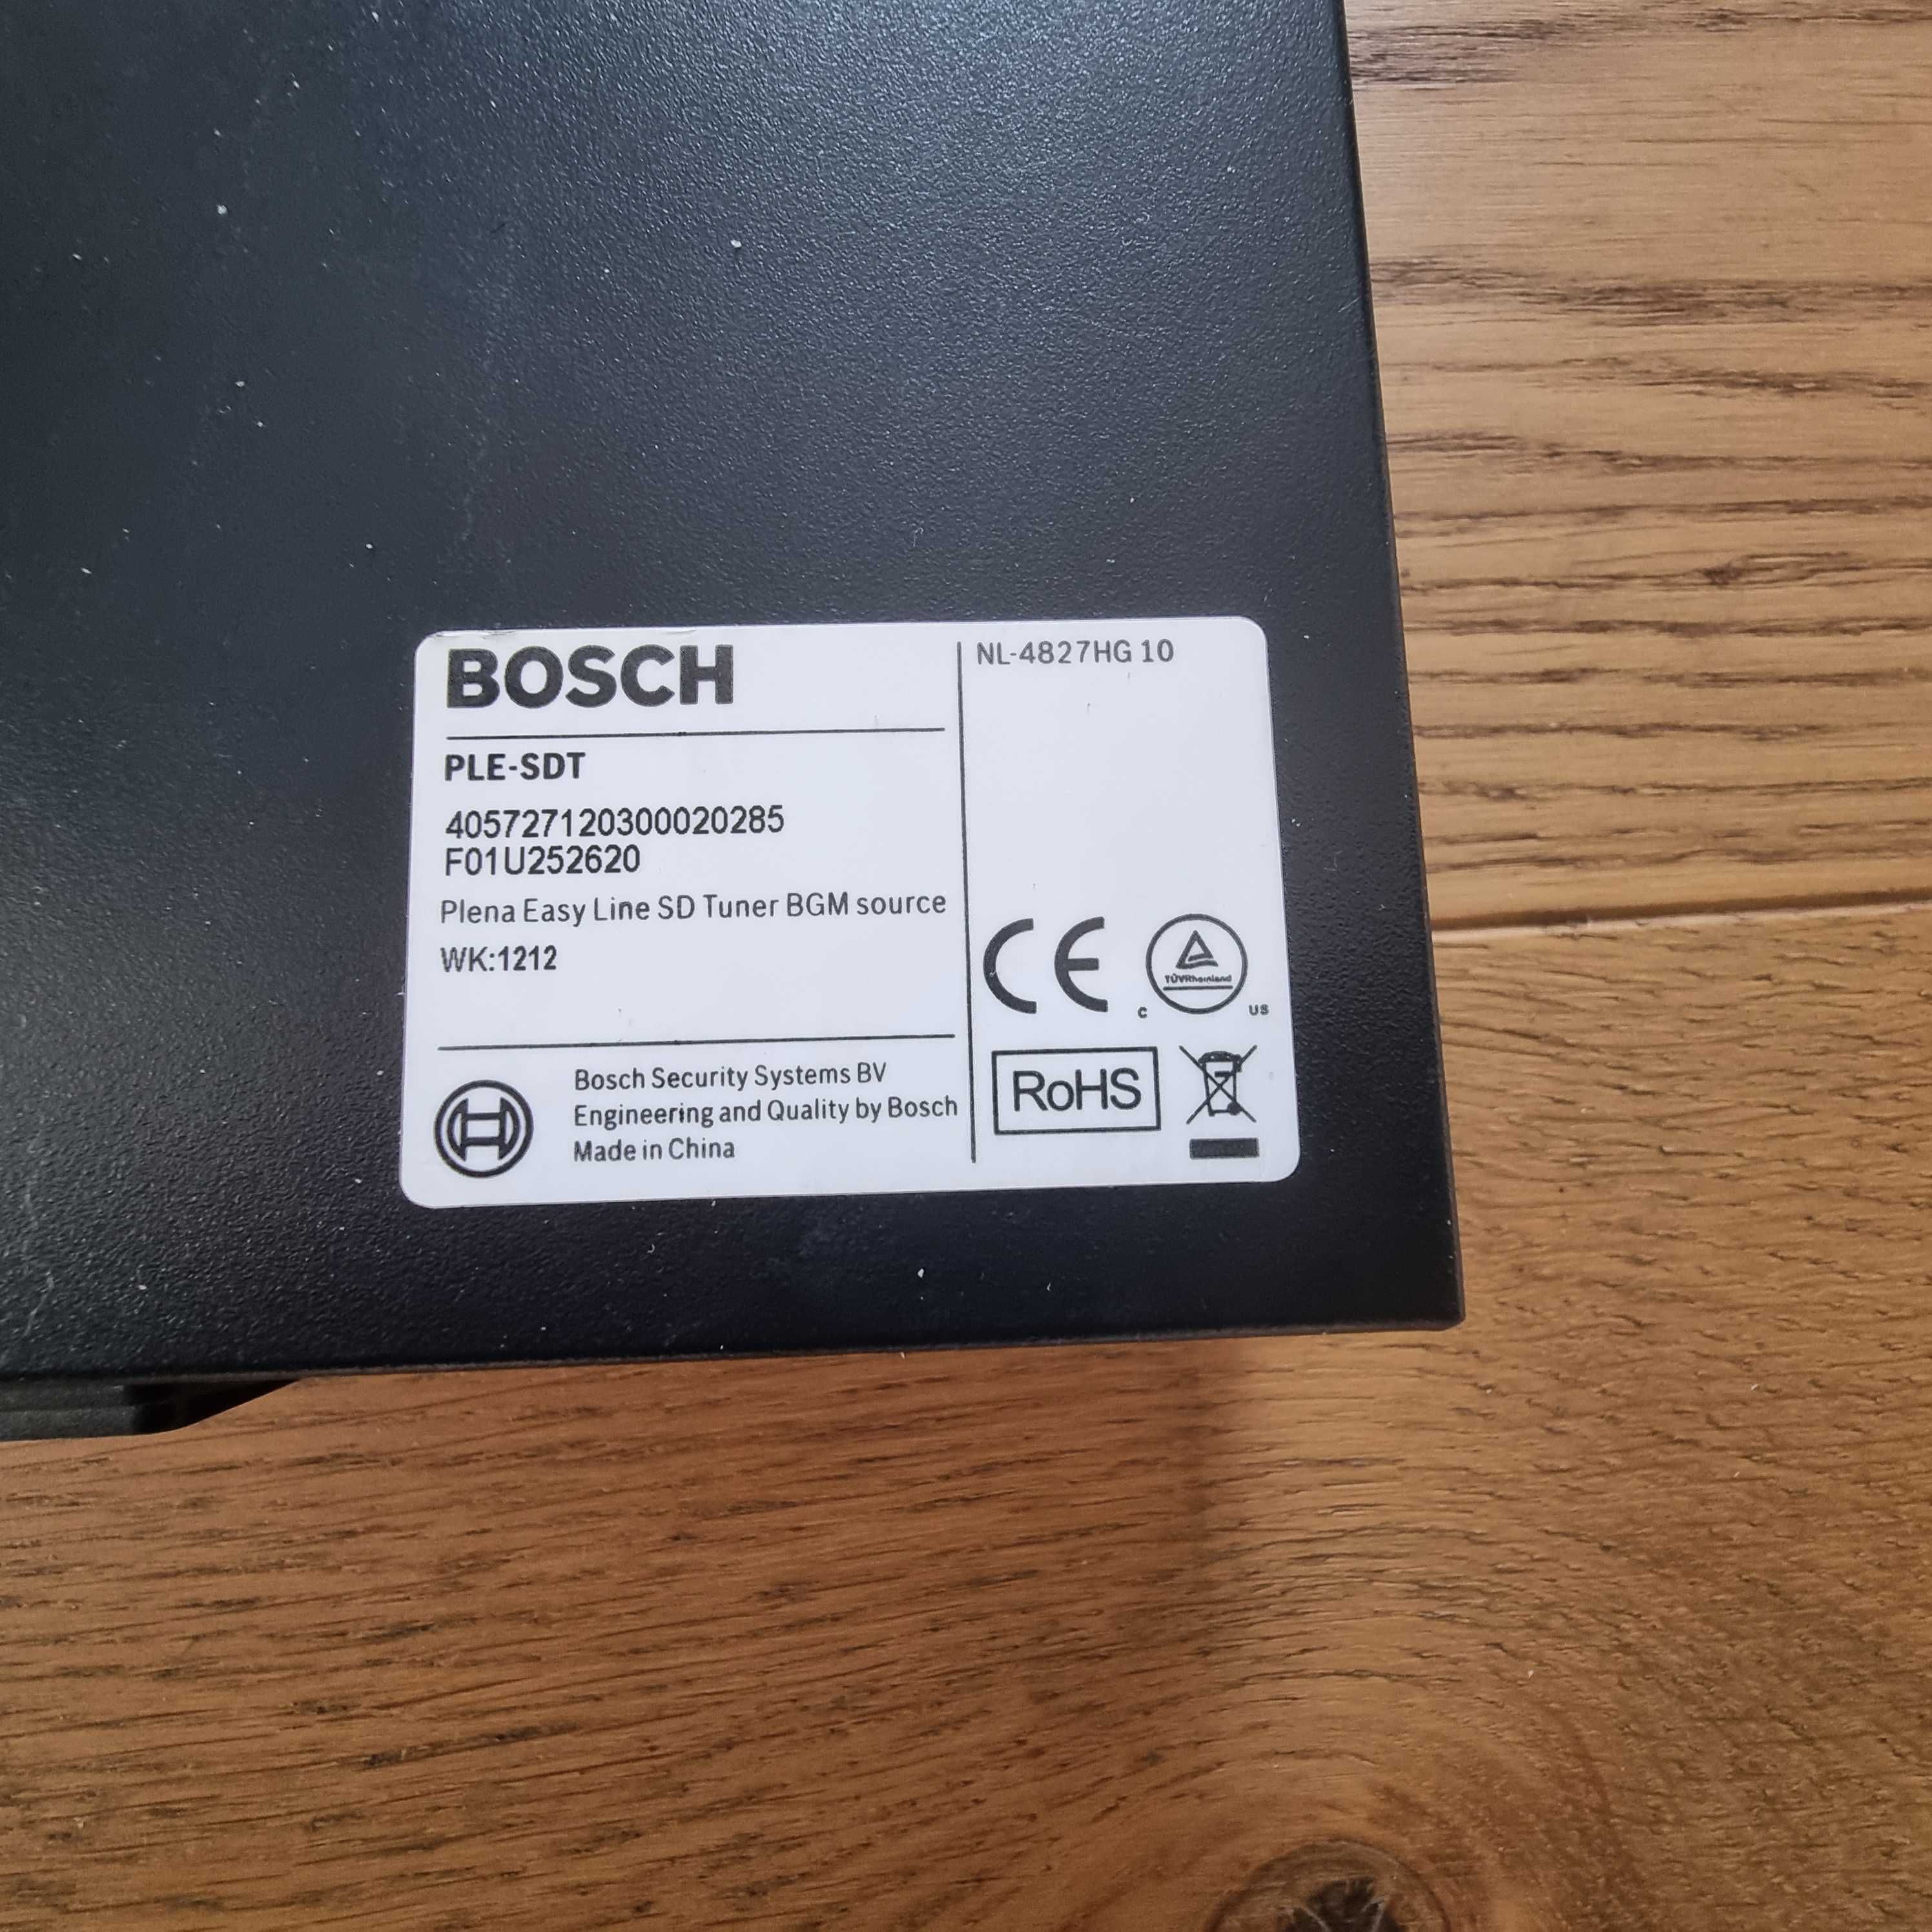 Bosch Plena Easy Line SD Tuner BGM source PLE-SDT